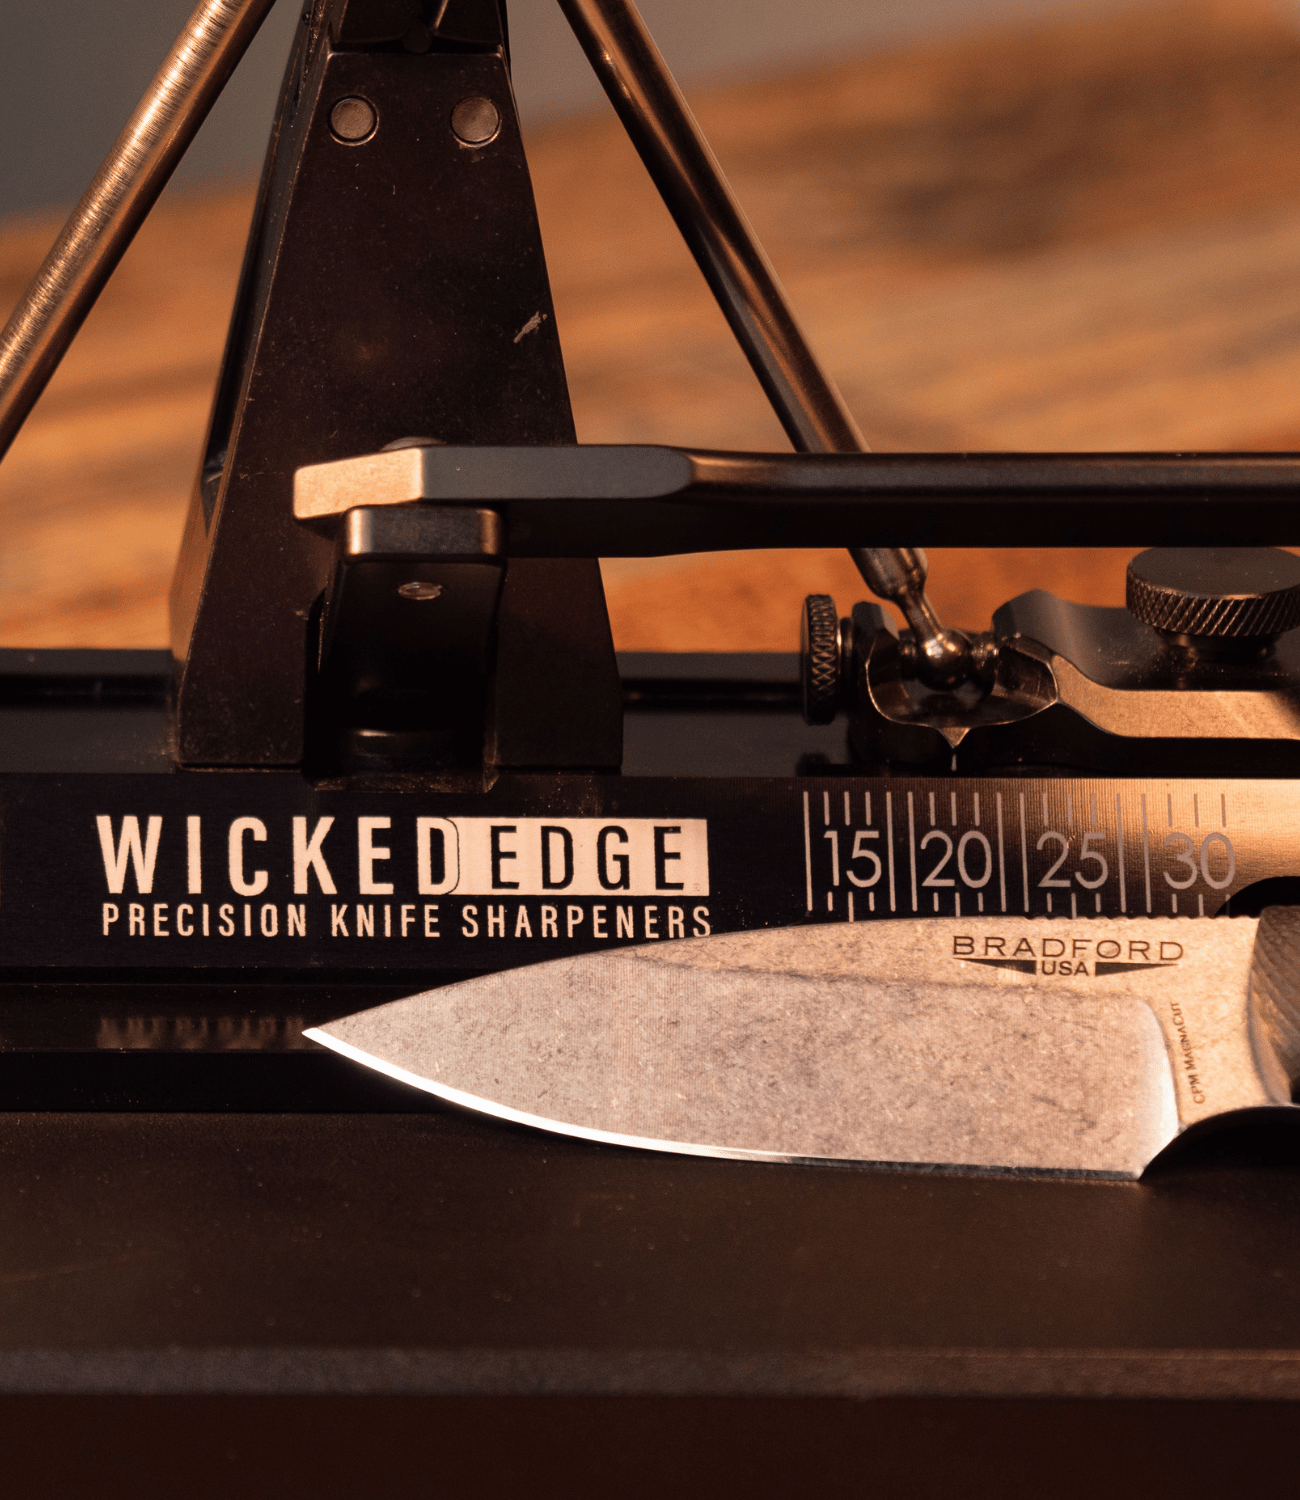 Edge-On-Up Professional Edge Tester – Wicked Edge Precision Knife Sharpener